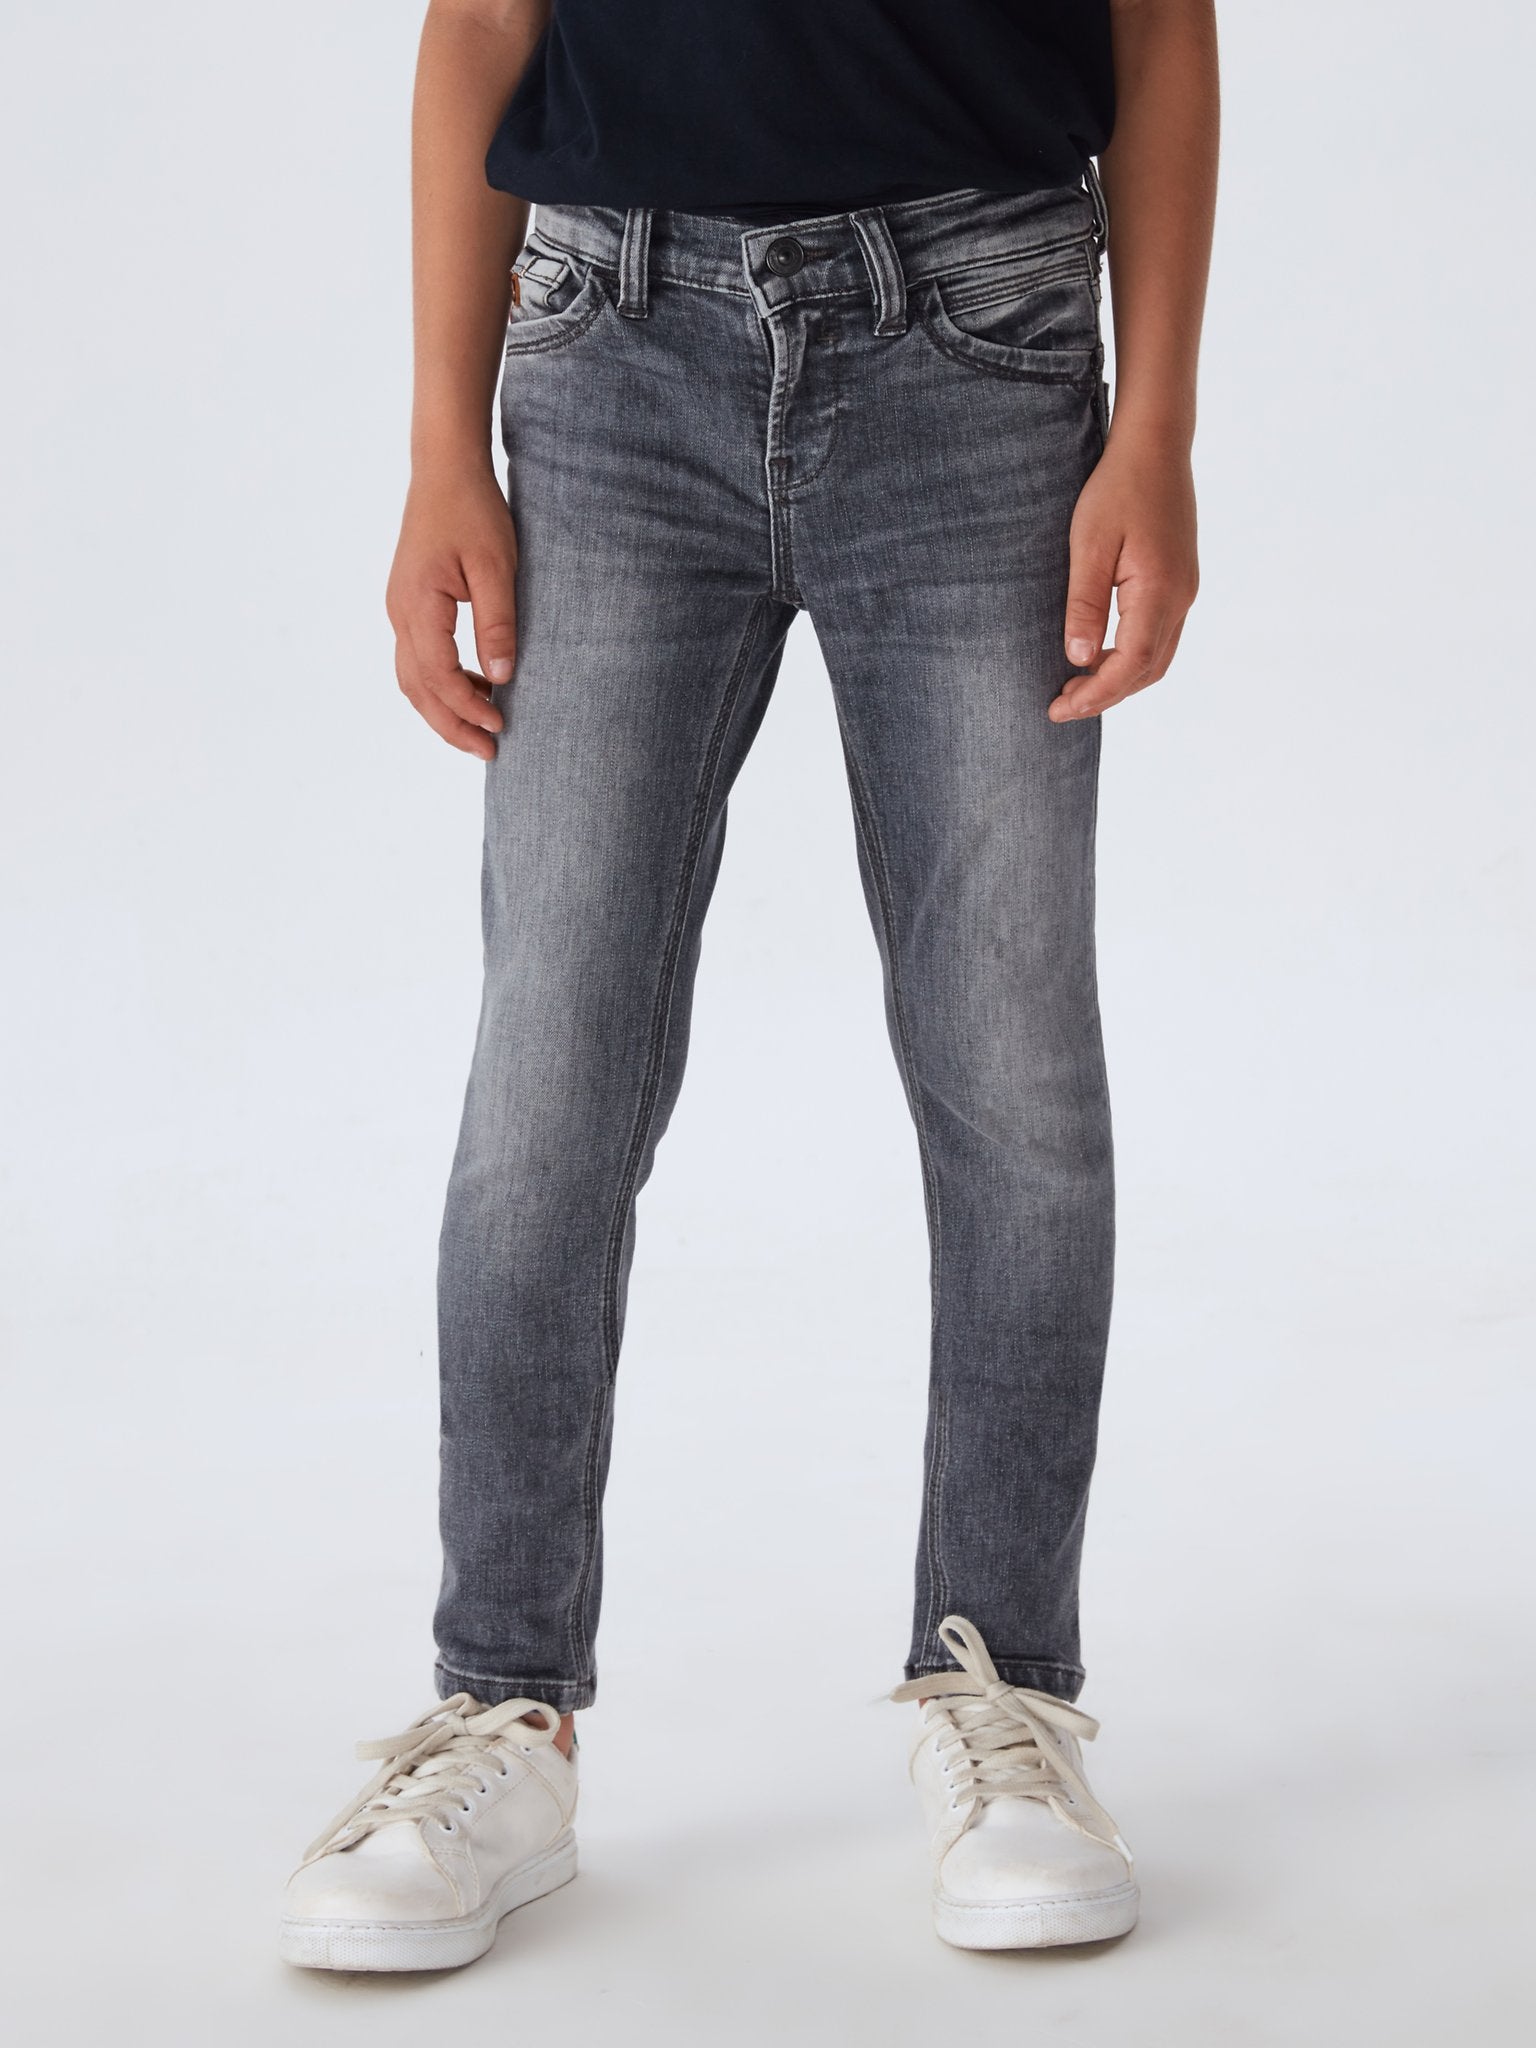 Jongens Jeans CAYLE BCALI UNDAMAGED WASH van LTB in de kleur CALI UNDAMAGED WASH in maat 176.